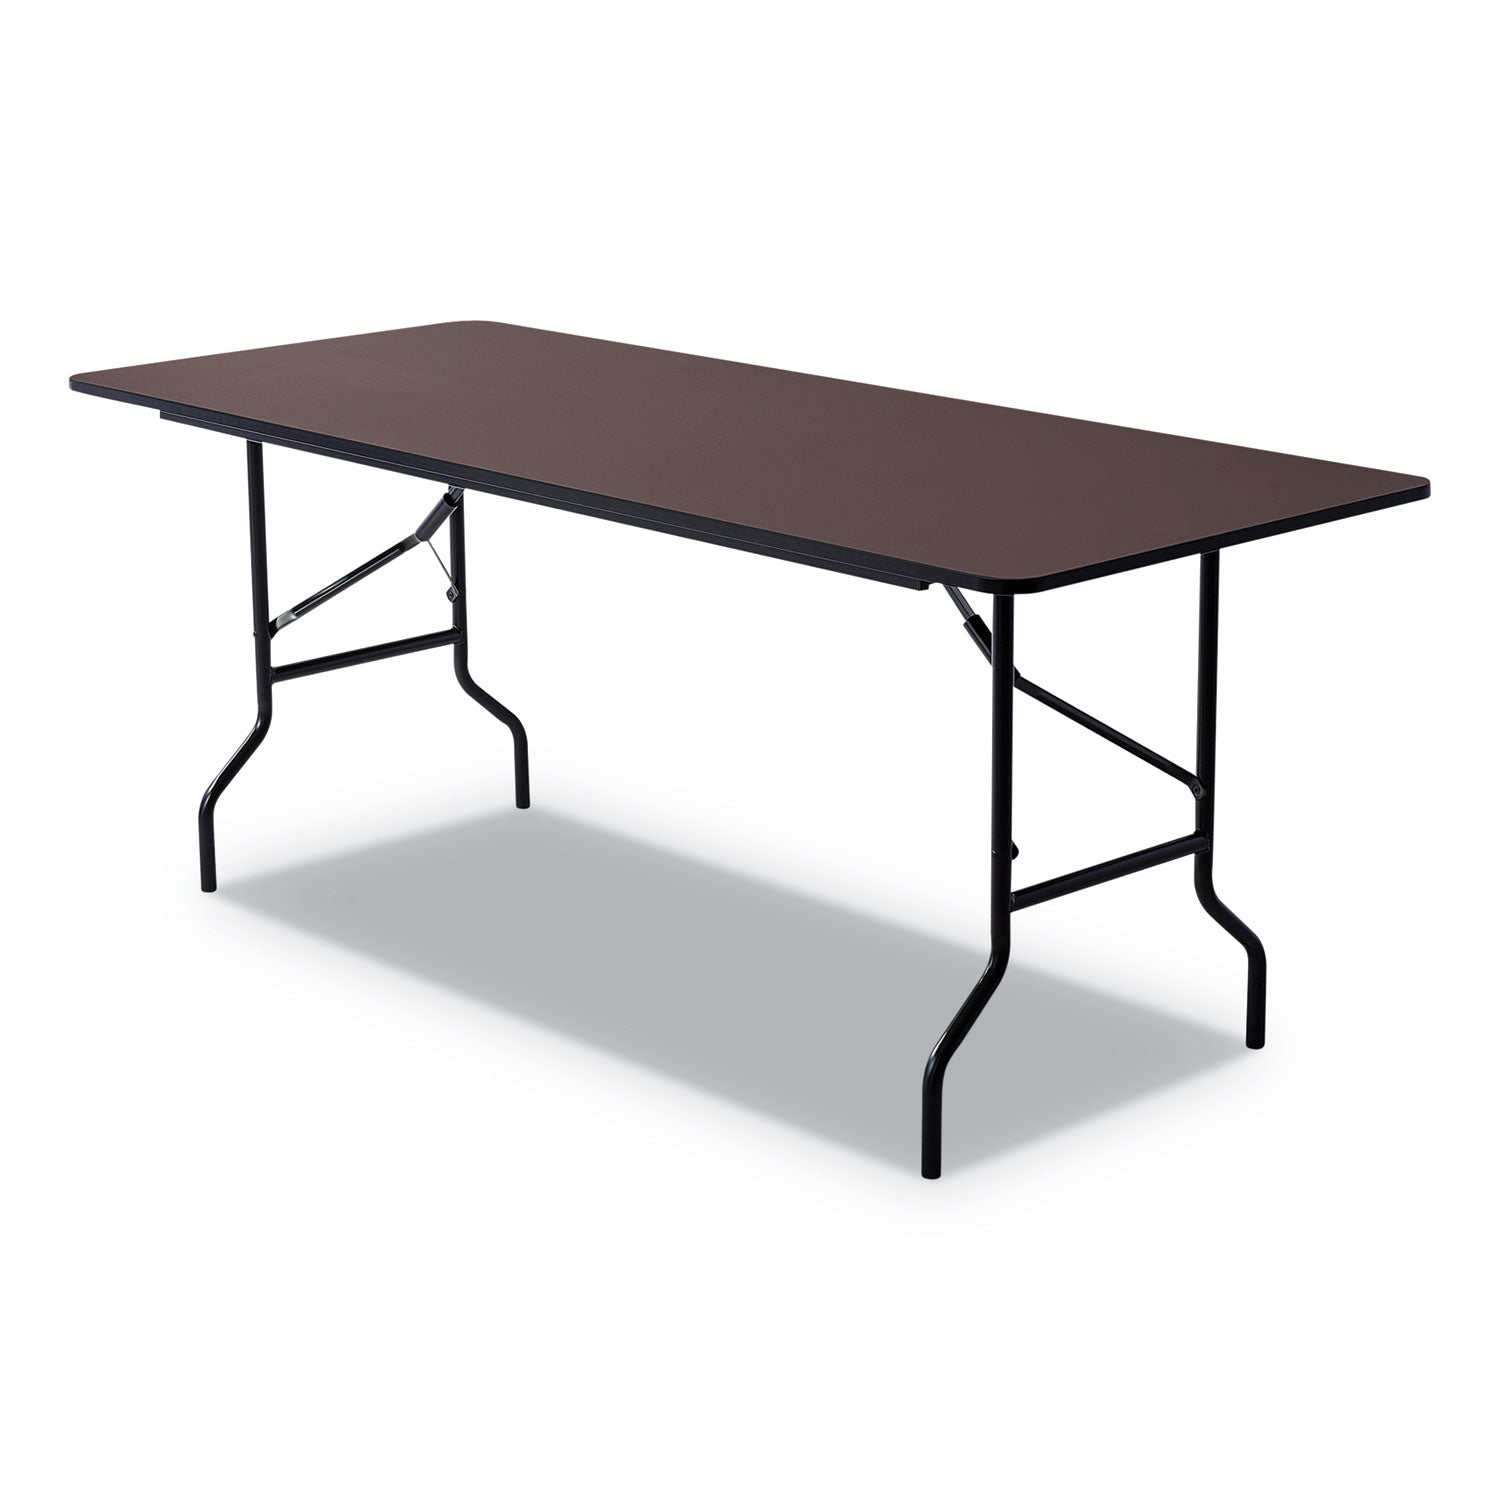 OfficeWorks Classic Wood-Laminate Folding Table, Curved Legs, Rectangular, 72" x 30" x 29", Walnut - 